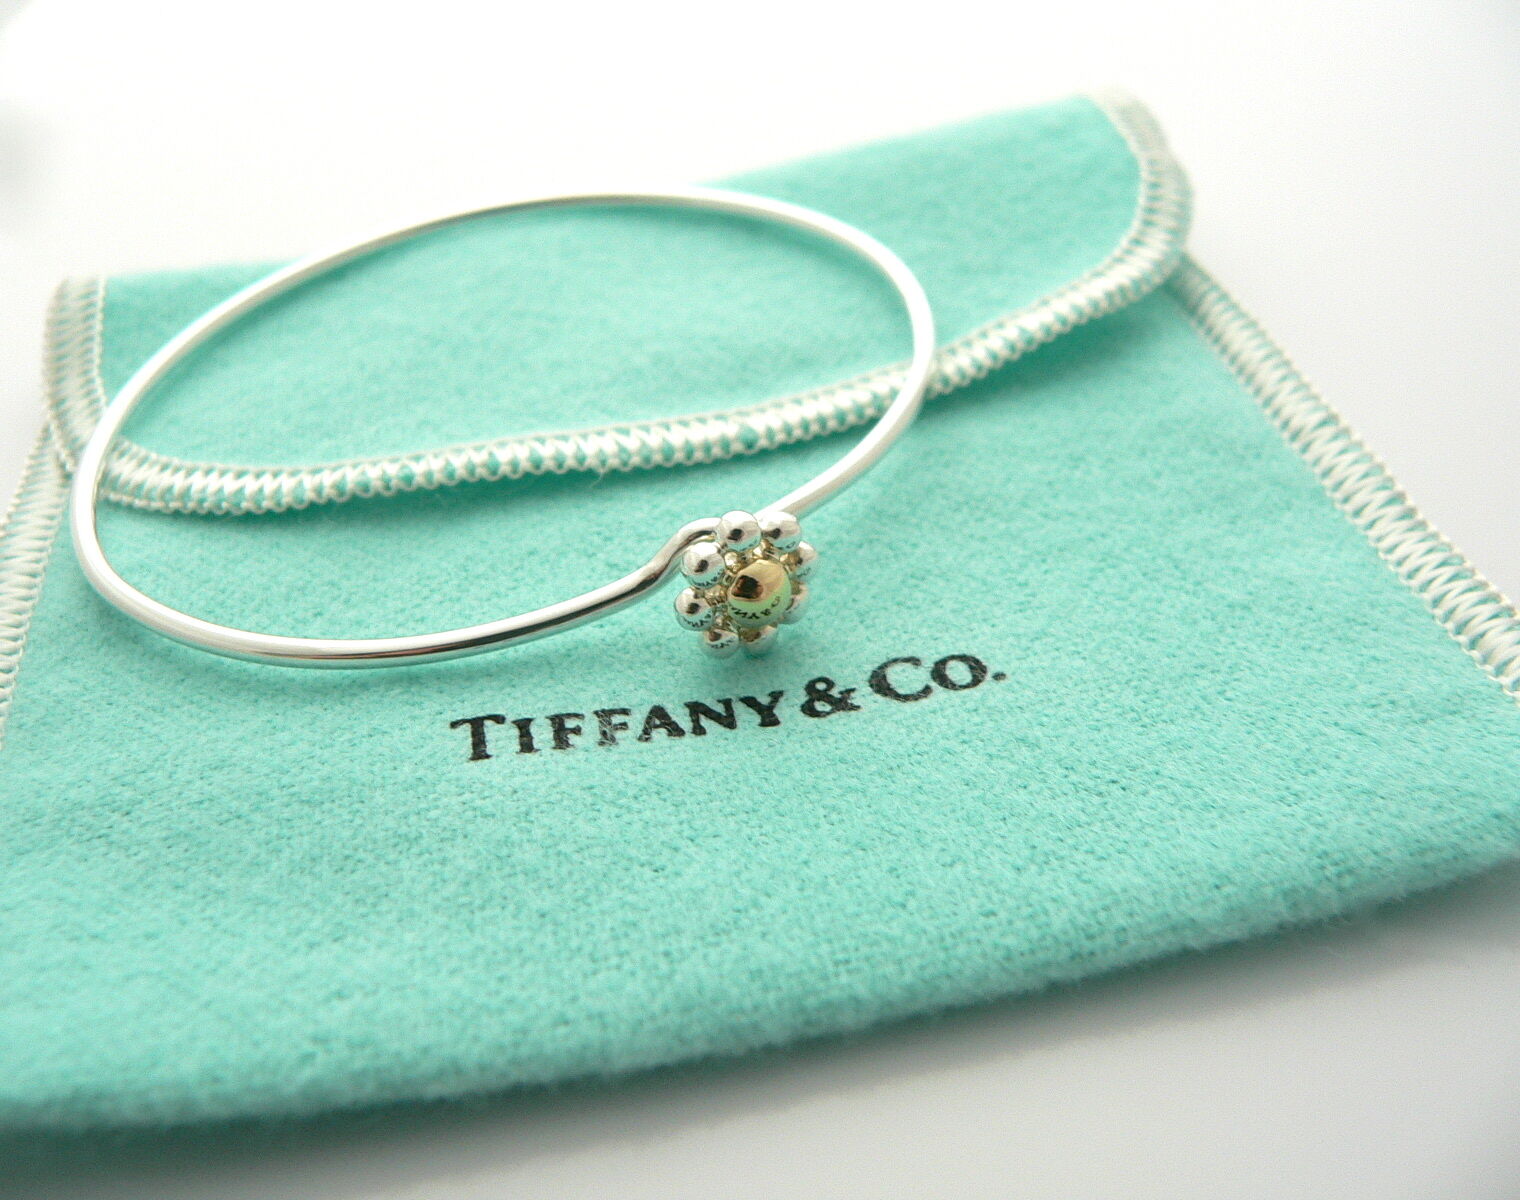 Tiffany & Co Silver 18K Gold Picasso Jolie Flower Bead Bracelet Bangle Gift Love